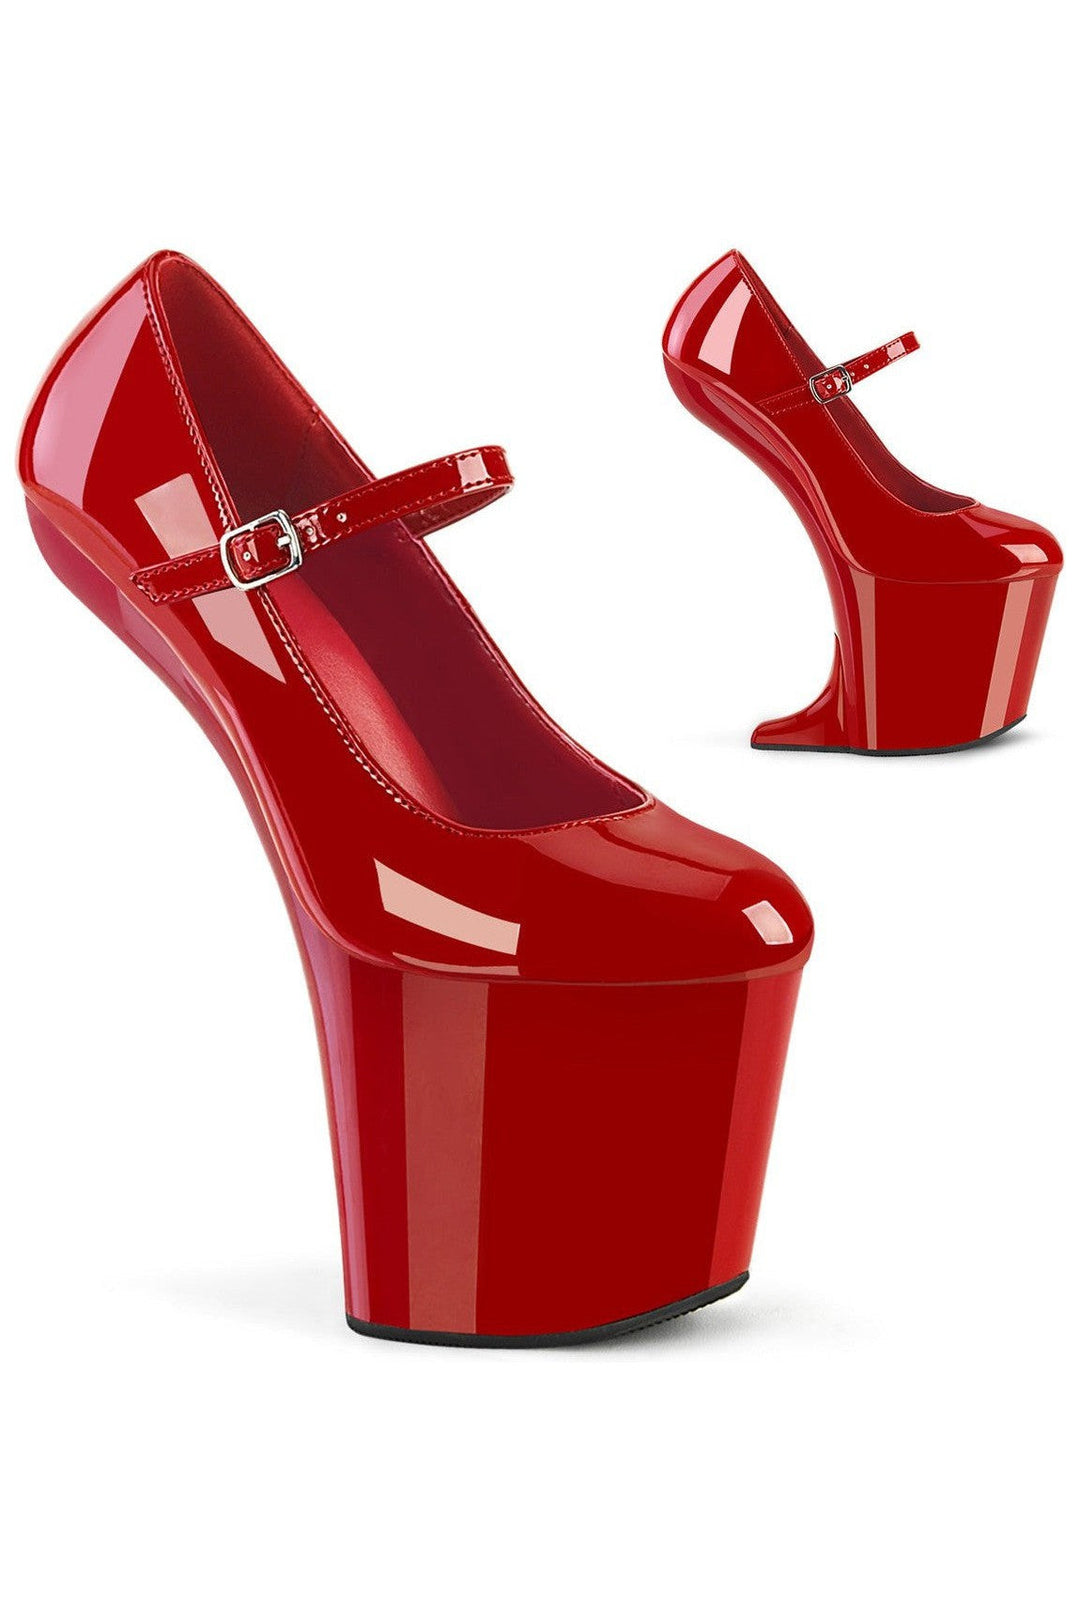 CRAZE-880 Red Patent Pump-Pumps- Stripper Shoes at SEXYSHOES.COM